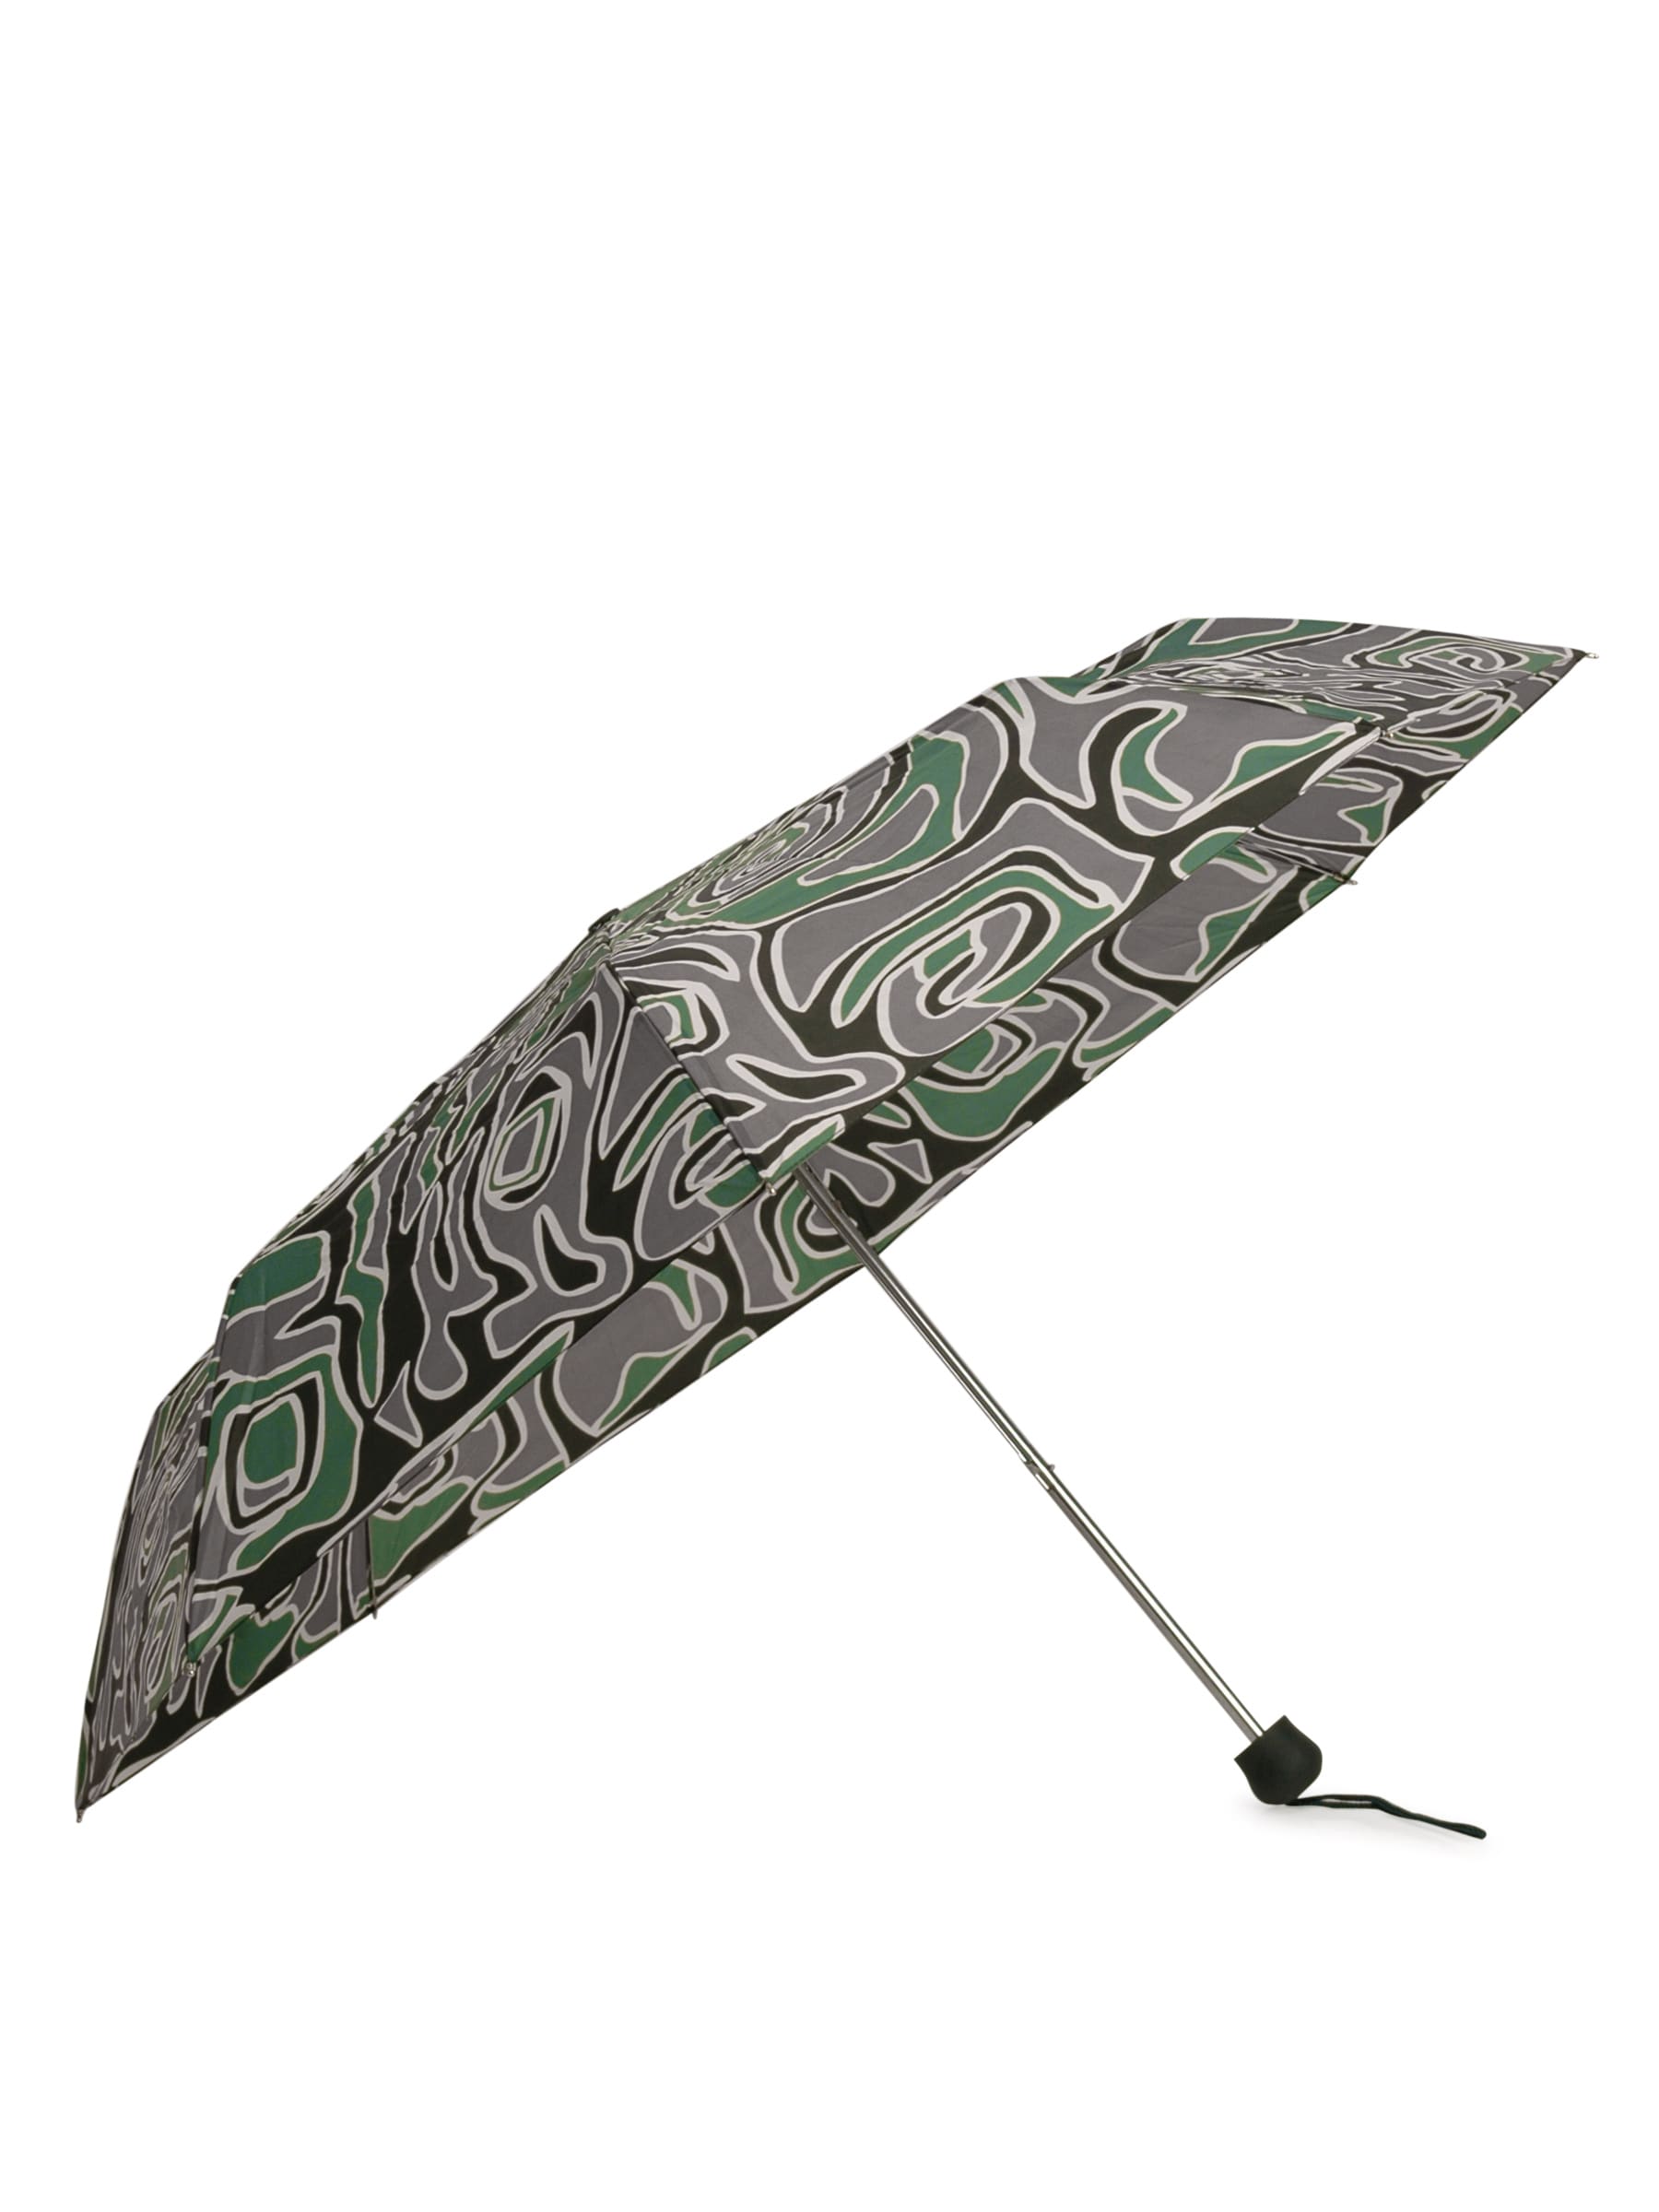 United Colors of Benetton Green Graphic Design Umbrella